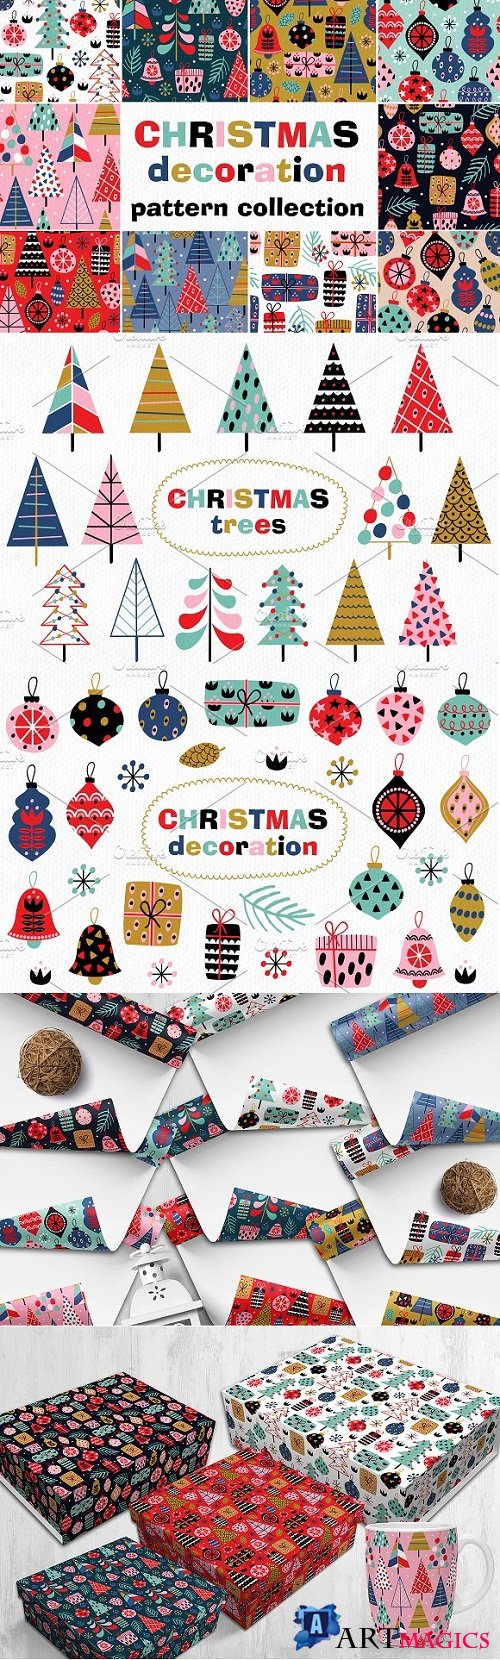 Christmas decorations pattern set - 3078357